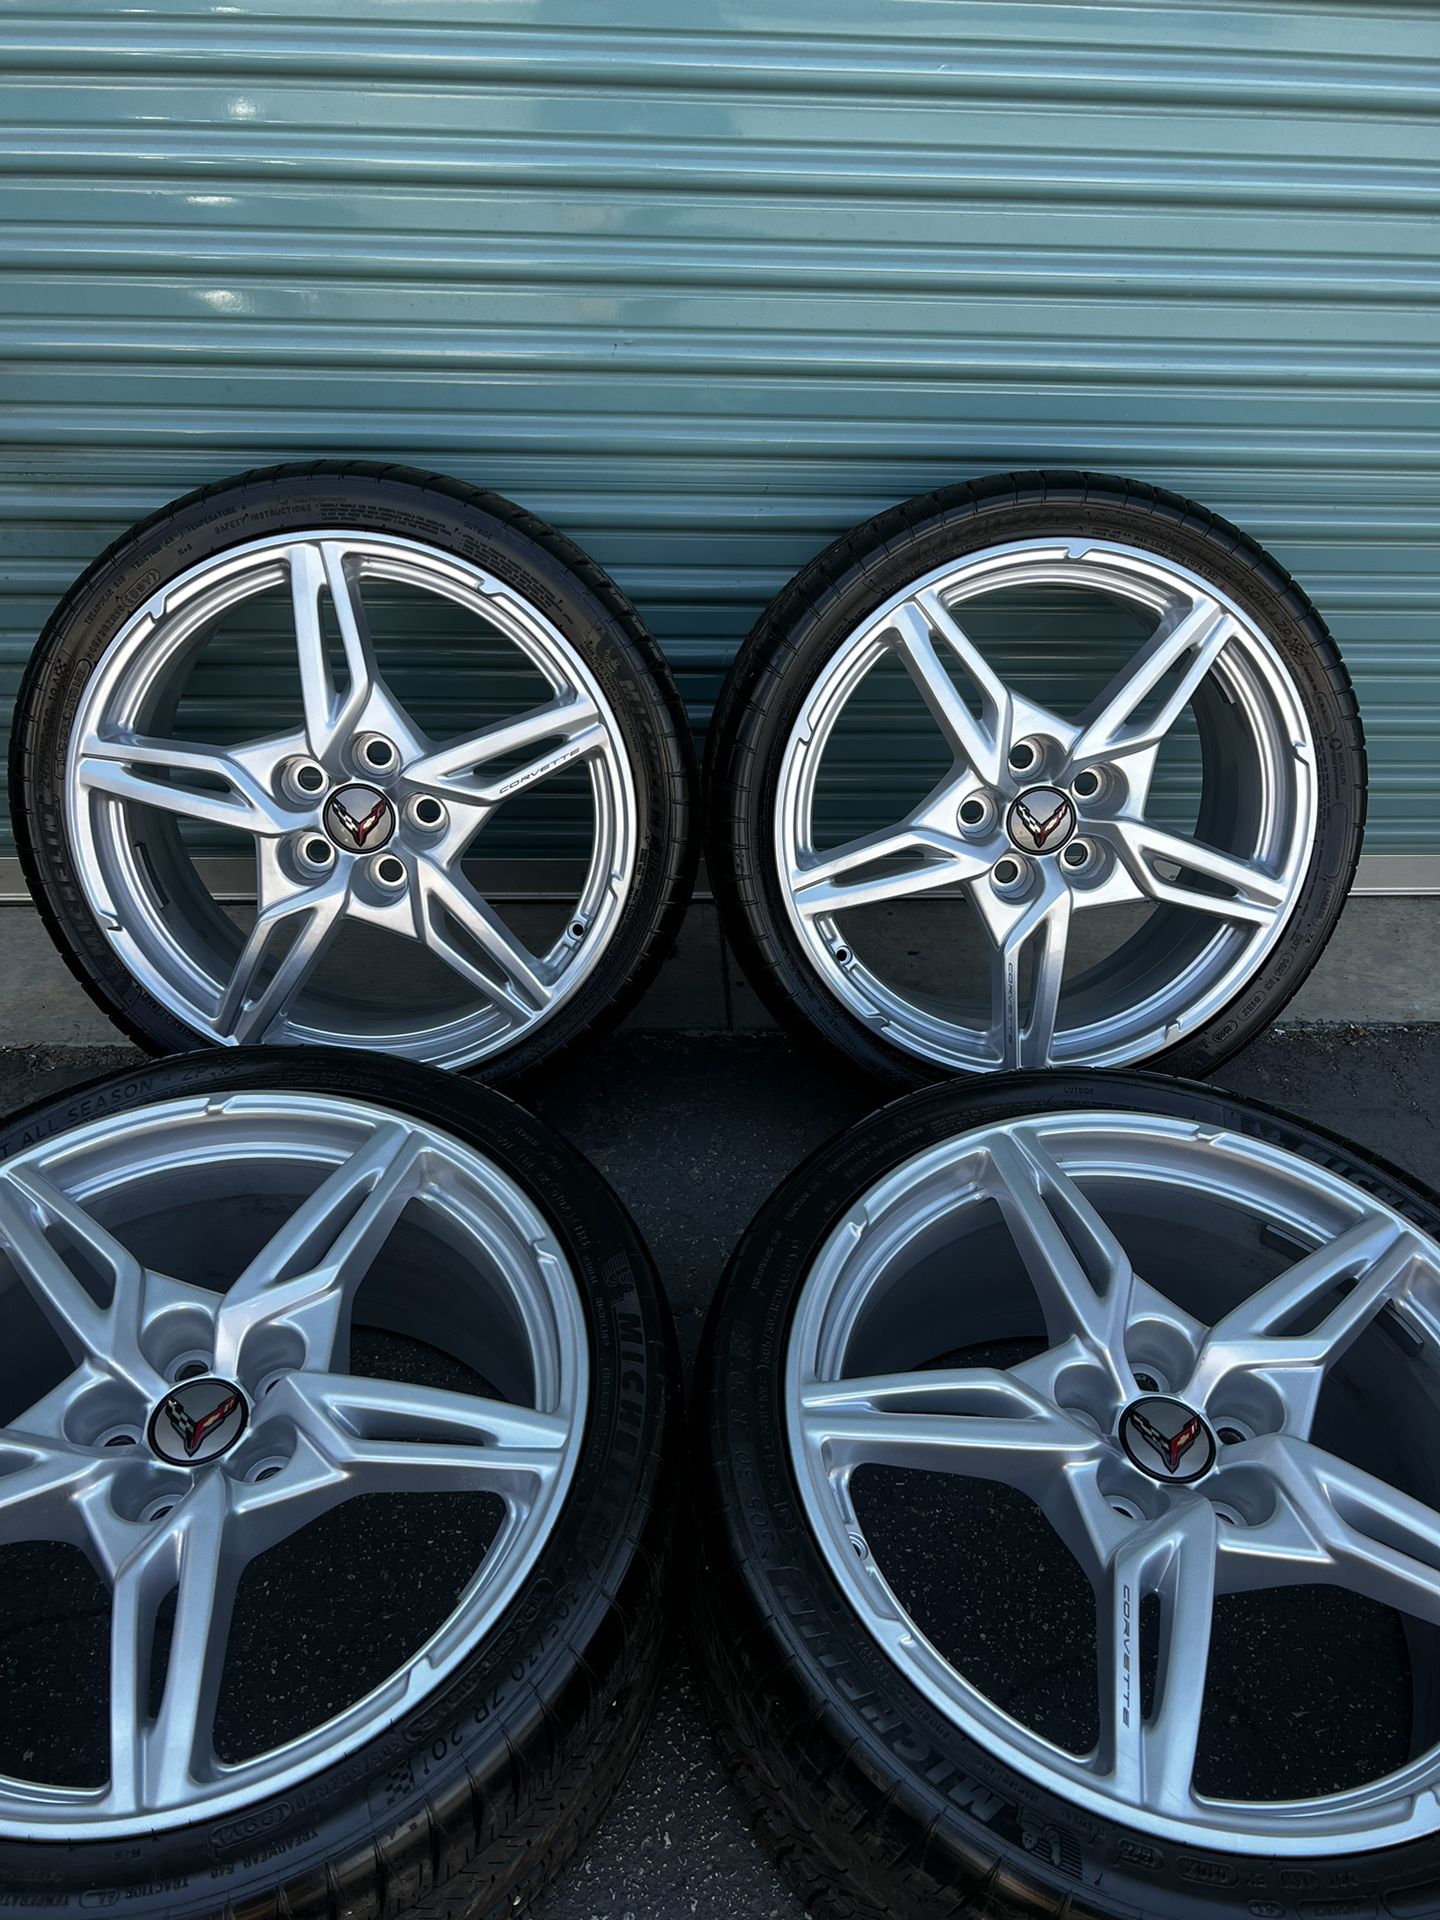 Chevy Corvette Factory Wheels Tires